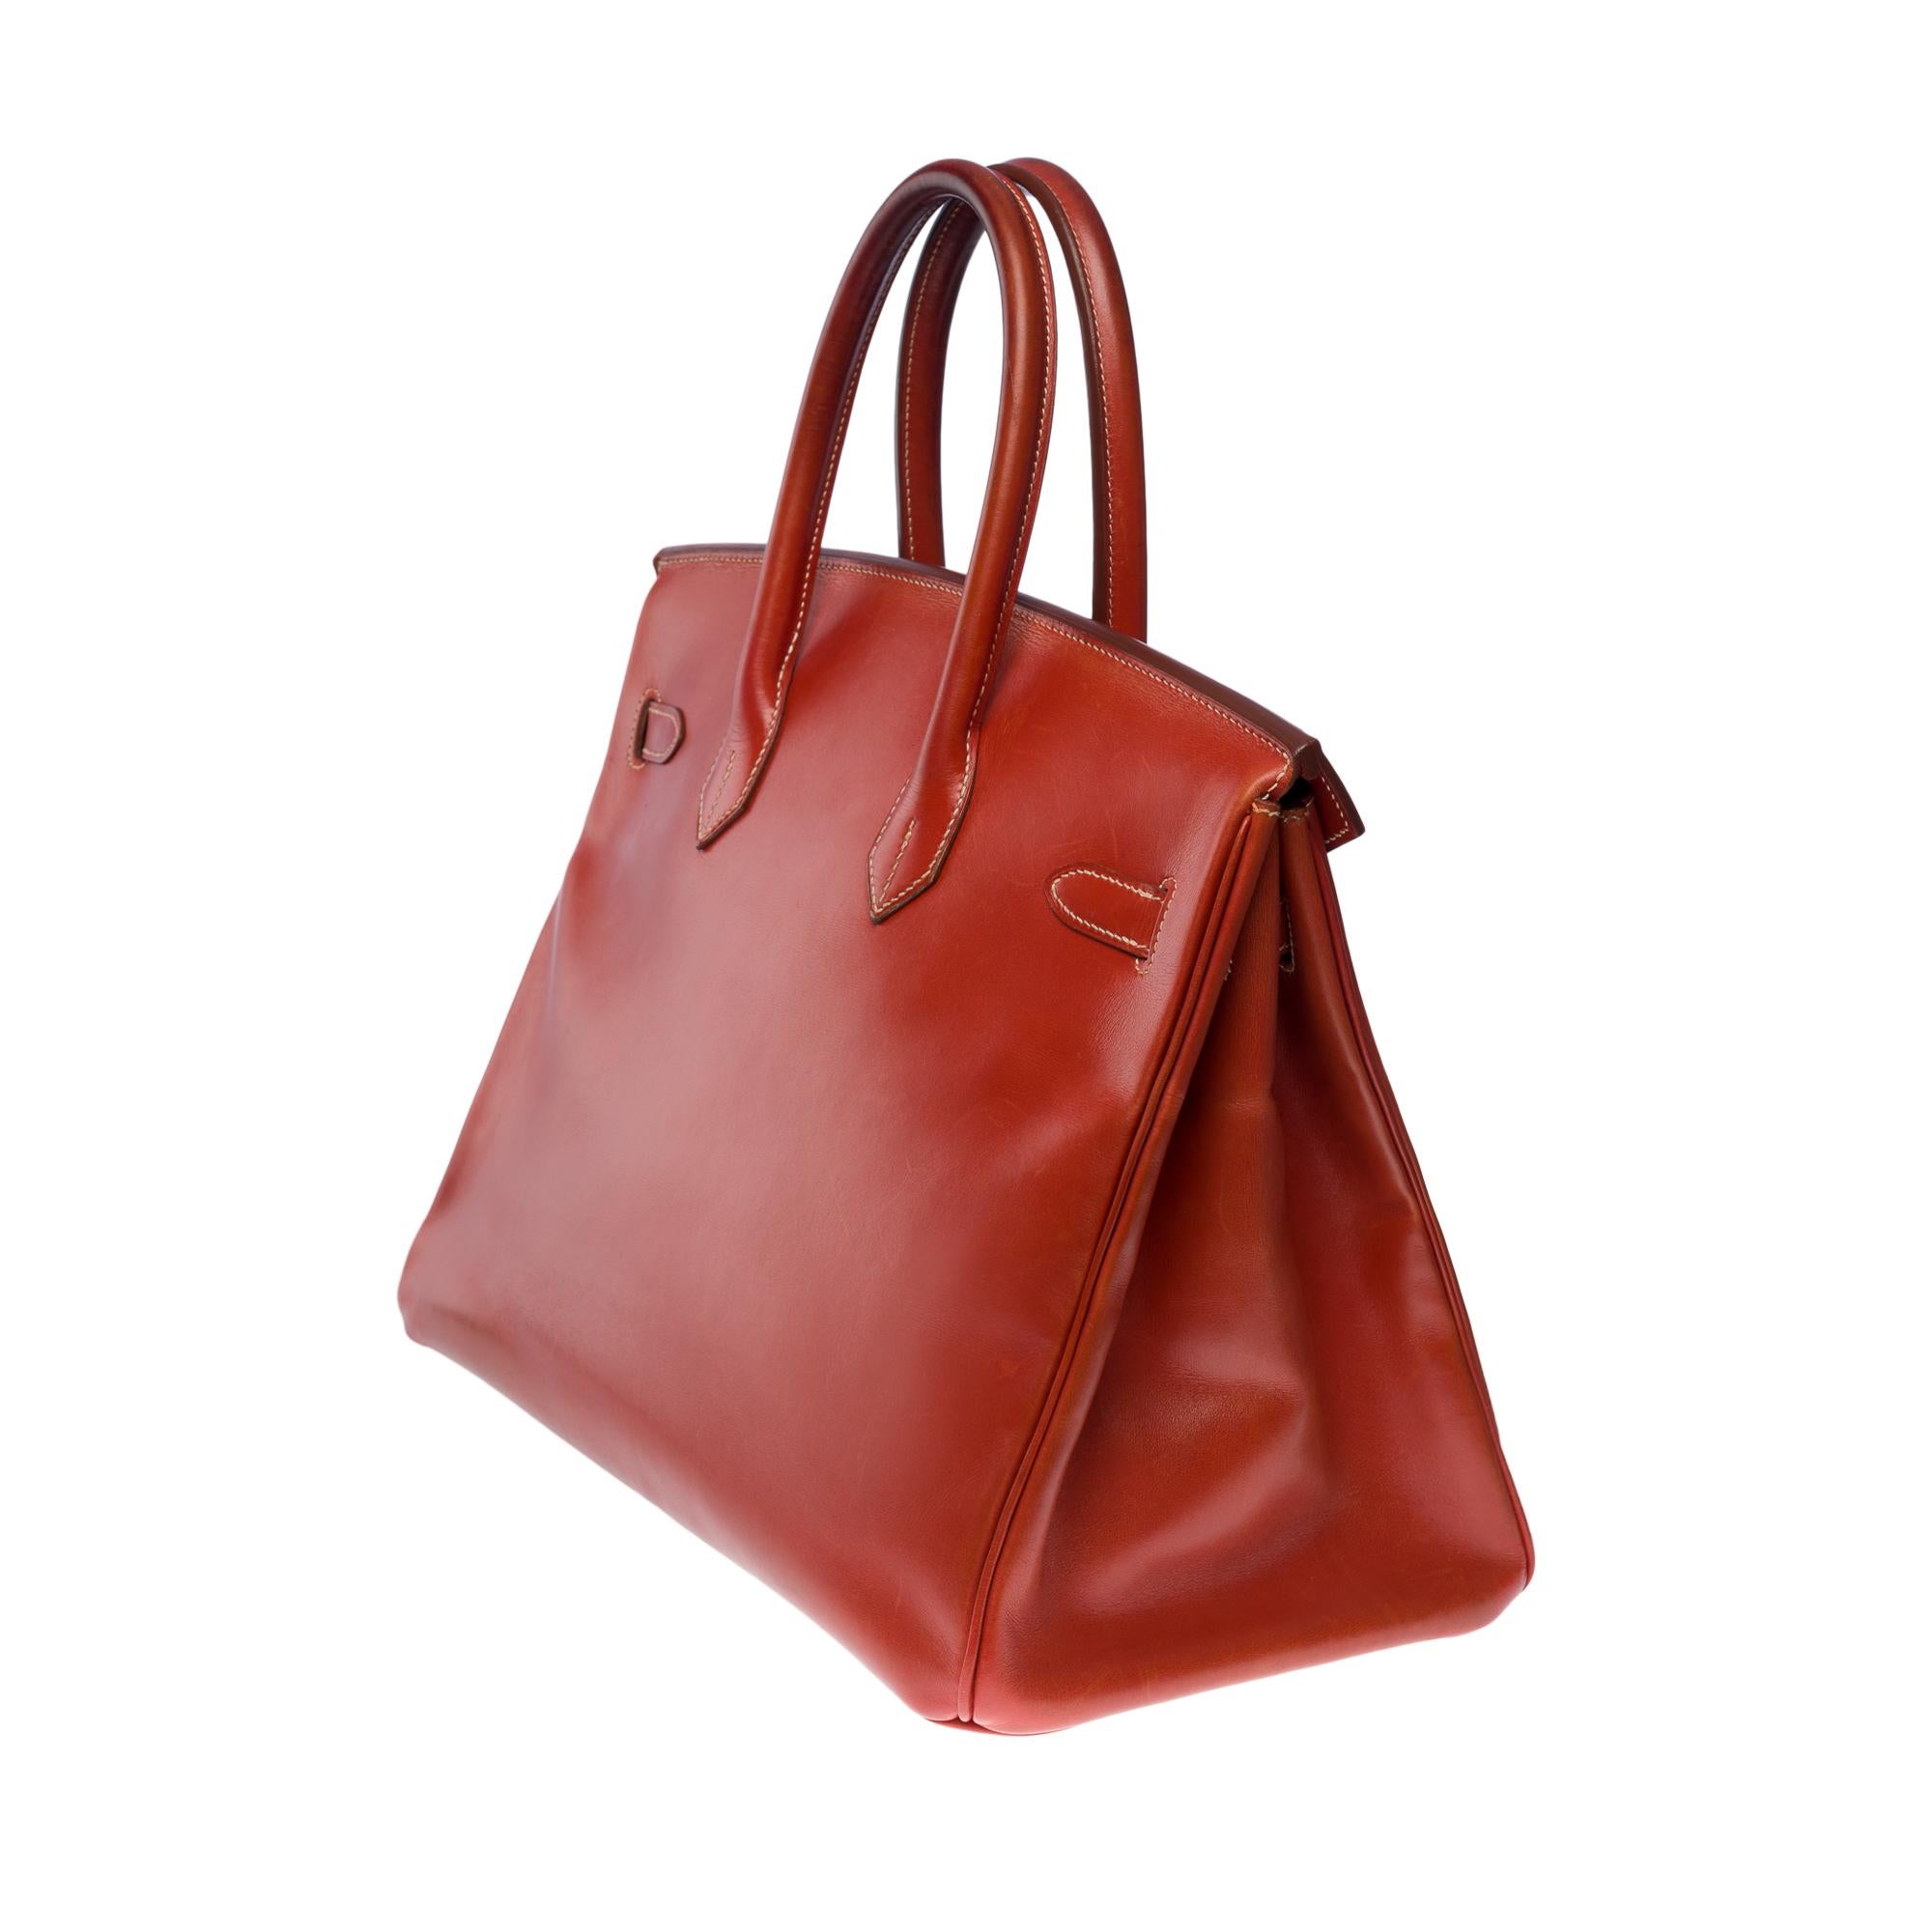 Women's or Men's Amazing & Rare Hermès Birkin 35 handbag in Cognac box calfskin leather, GHW